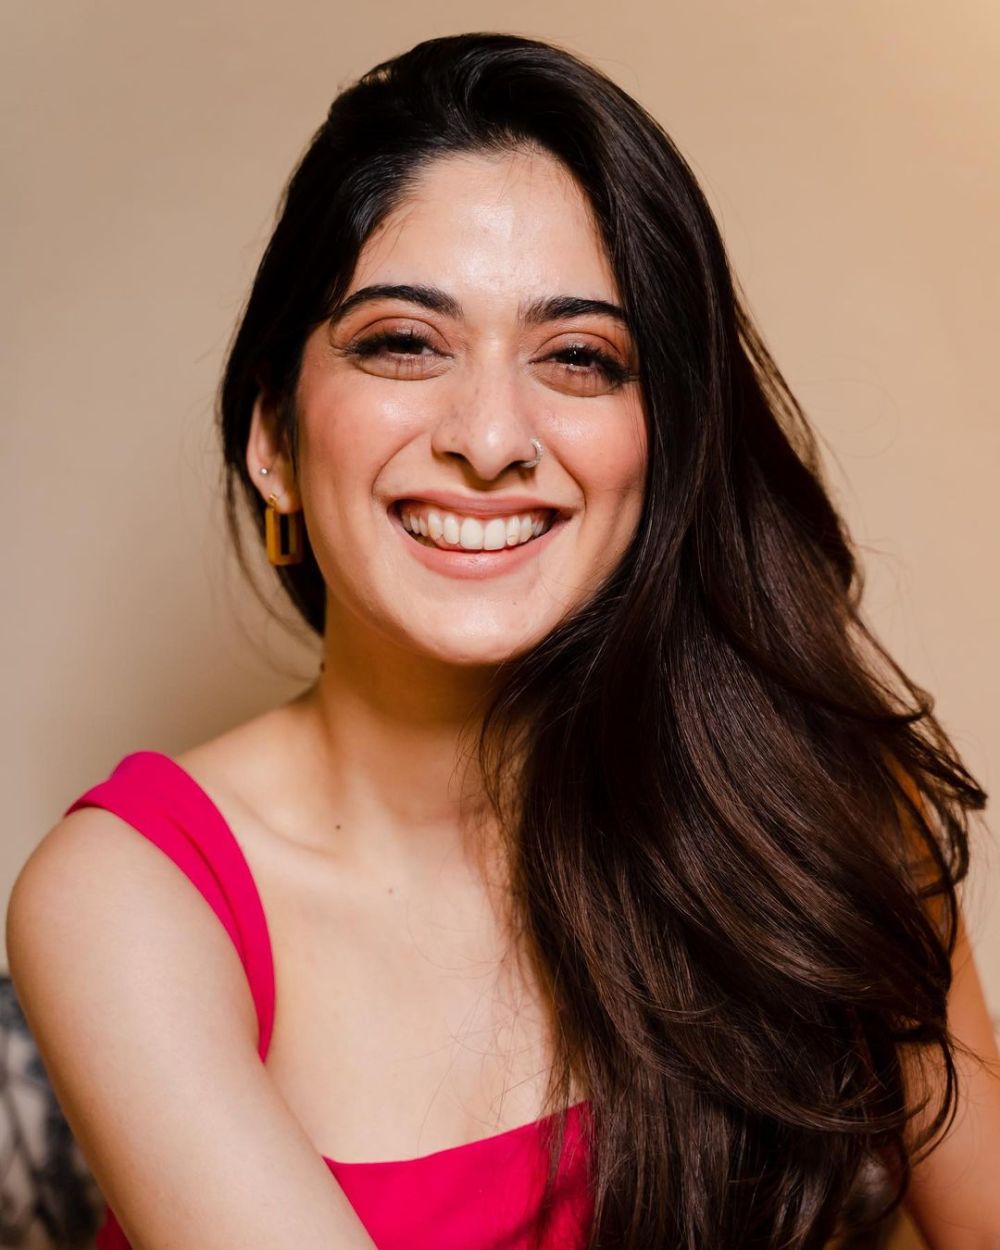 7 Fakta Tanya Maniktala, Aktris Pendatang Baru Perfilman Bollywood